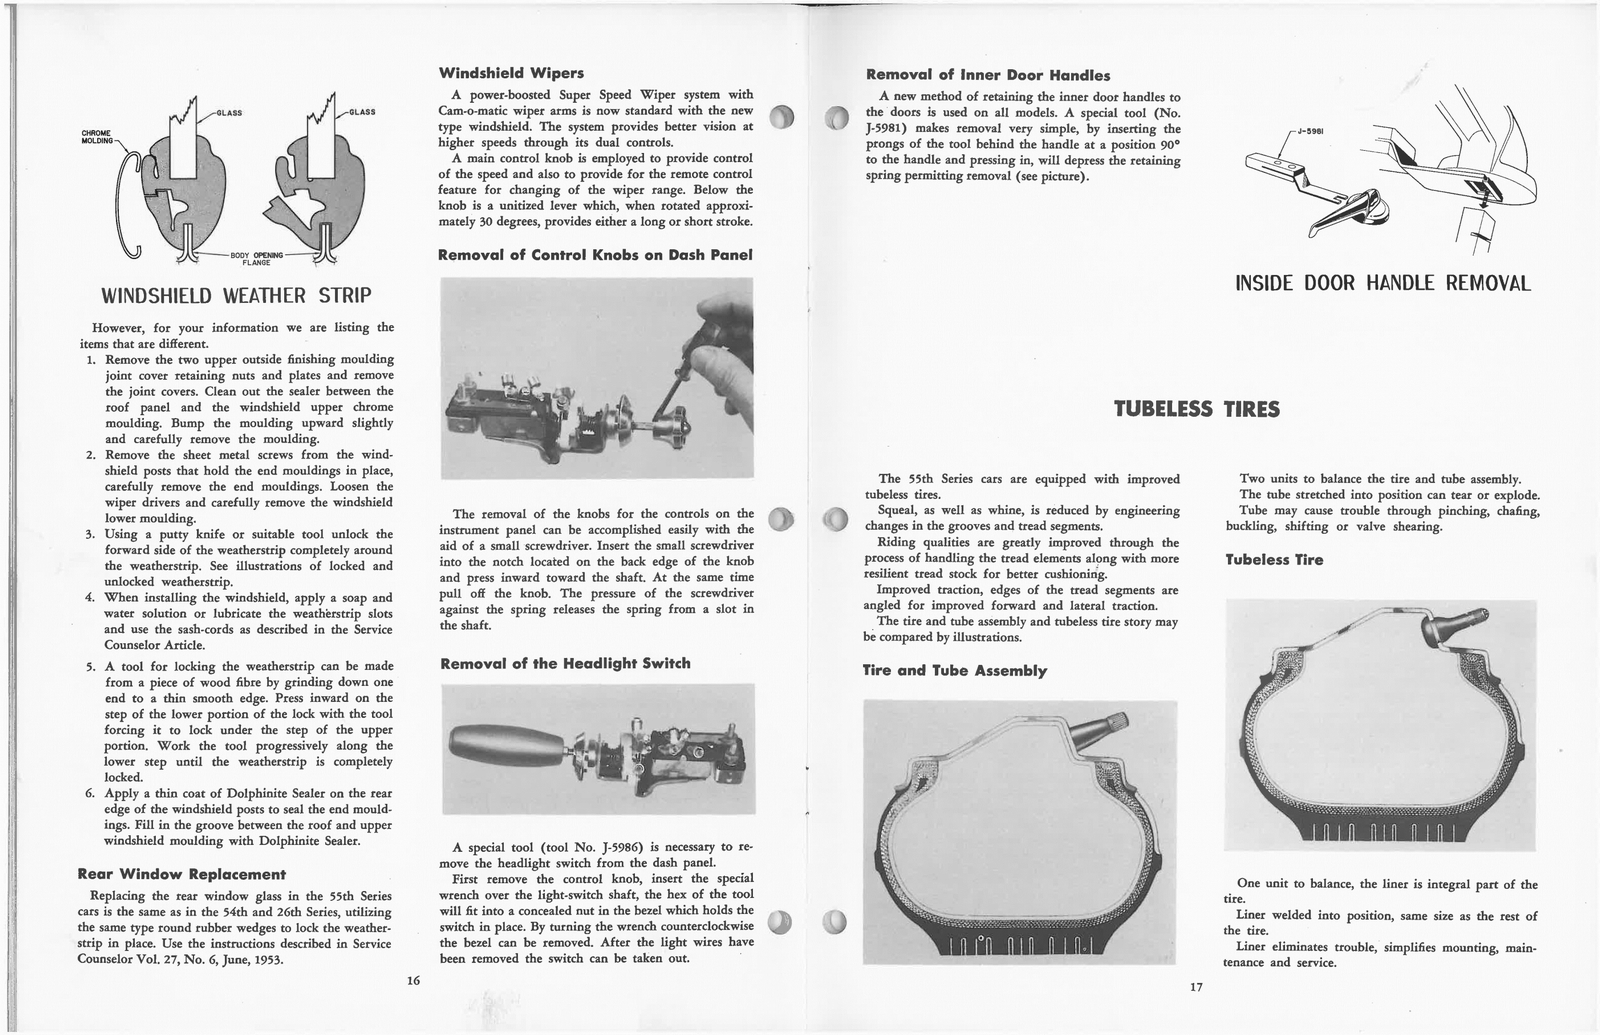 n_1955 Packard Sevicemens Training Book-16-17.jpg